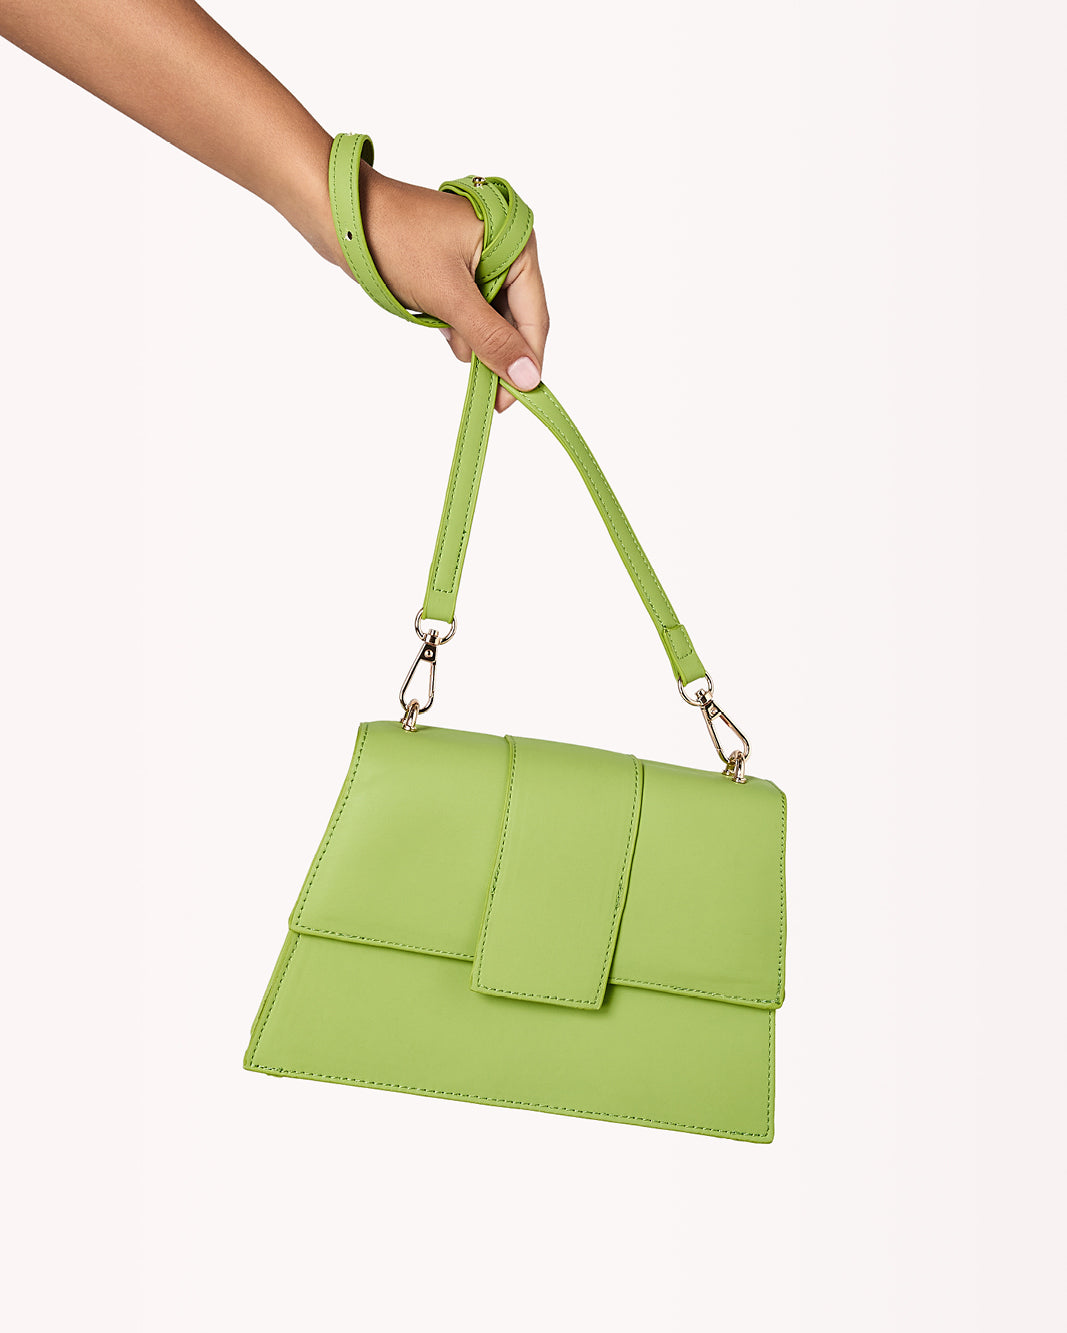 DOLLY CROSS BODY BAG - LIME TEXTURE-Handbags-Billini-O/S-BILLINI USA